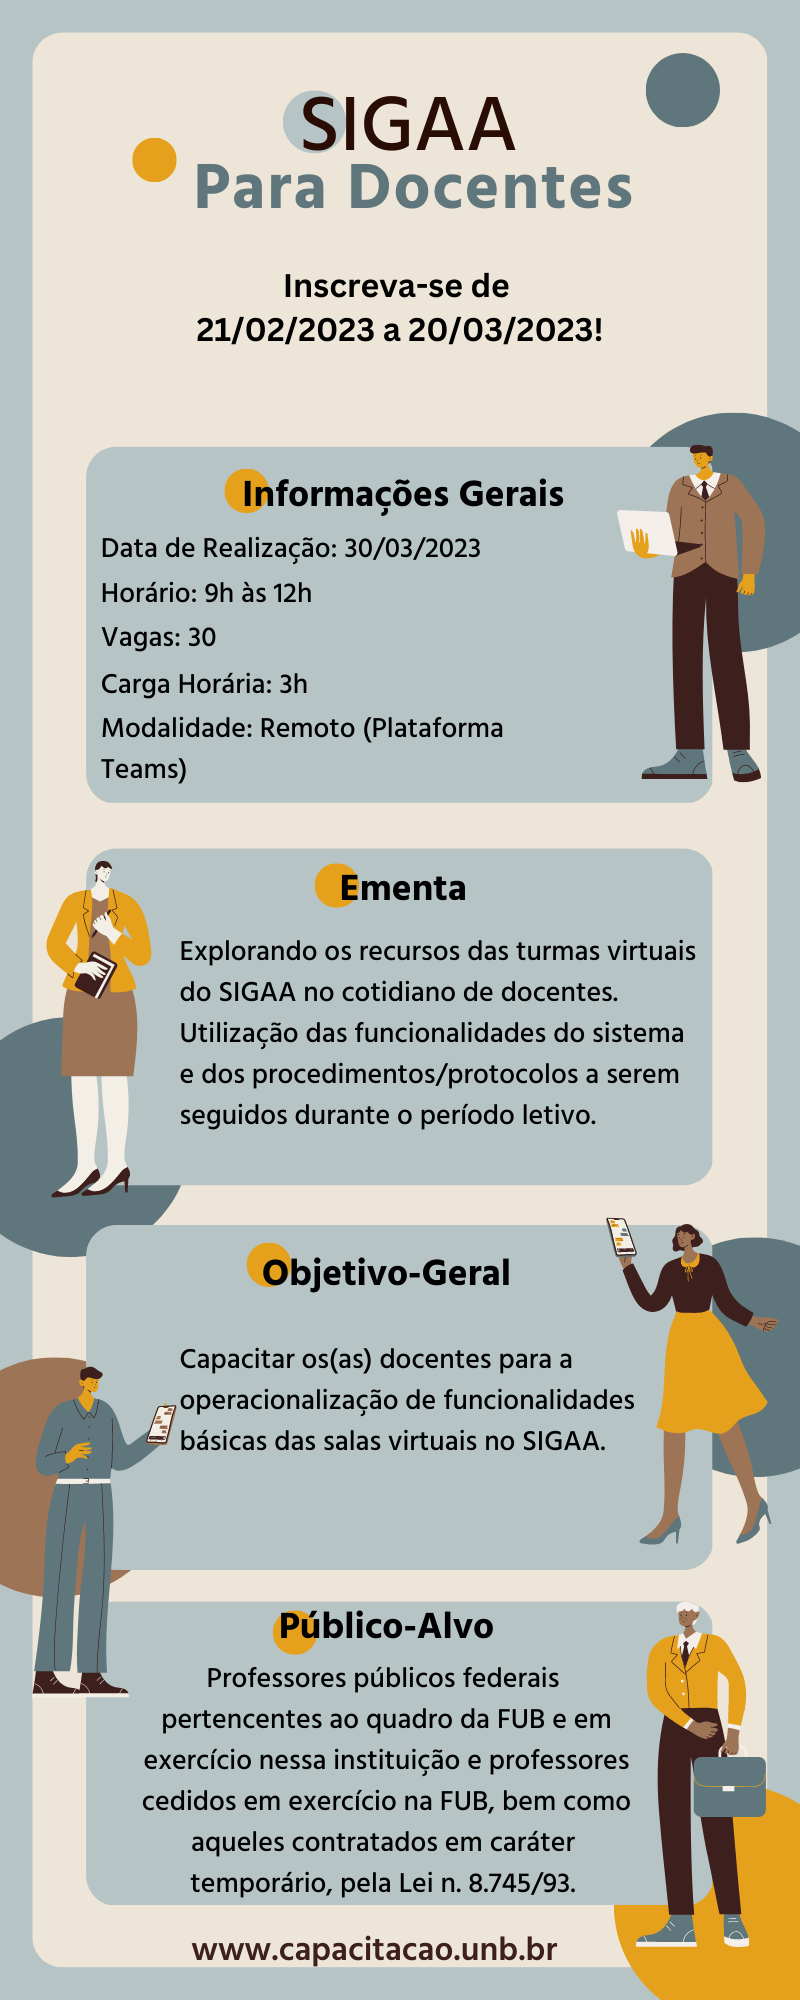 Sigaa_Para_Docentes_Infográfico_2.png